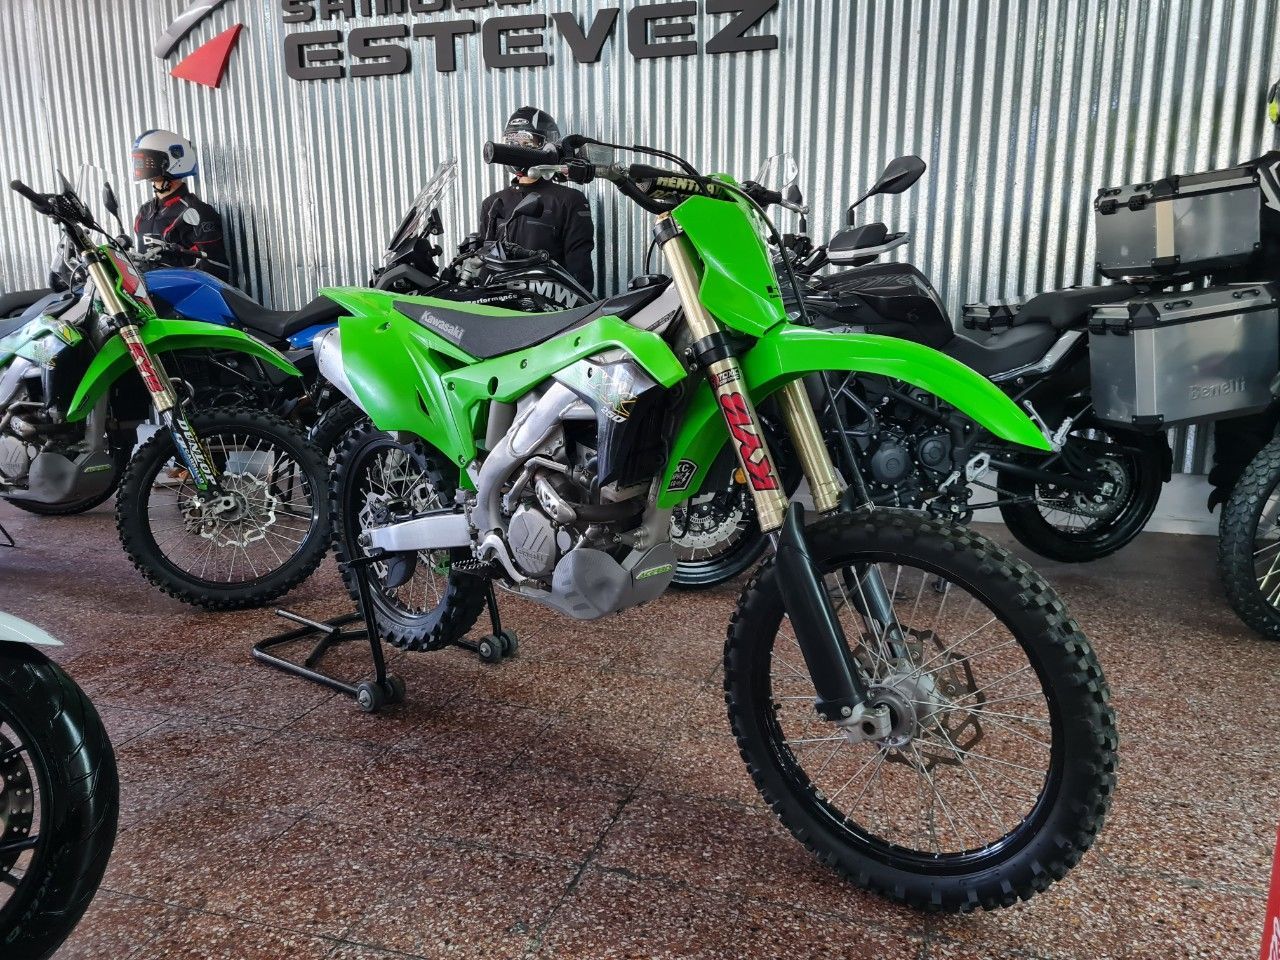 Kawasaki KX Usada en Mendoza, deRuedas